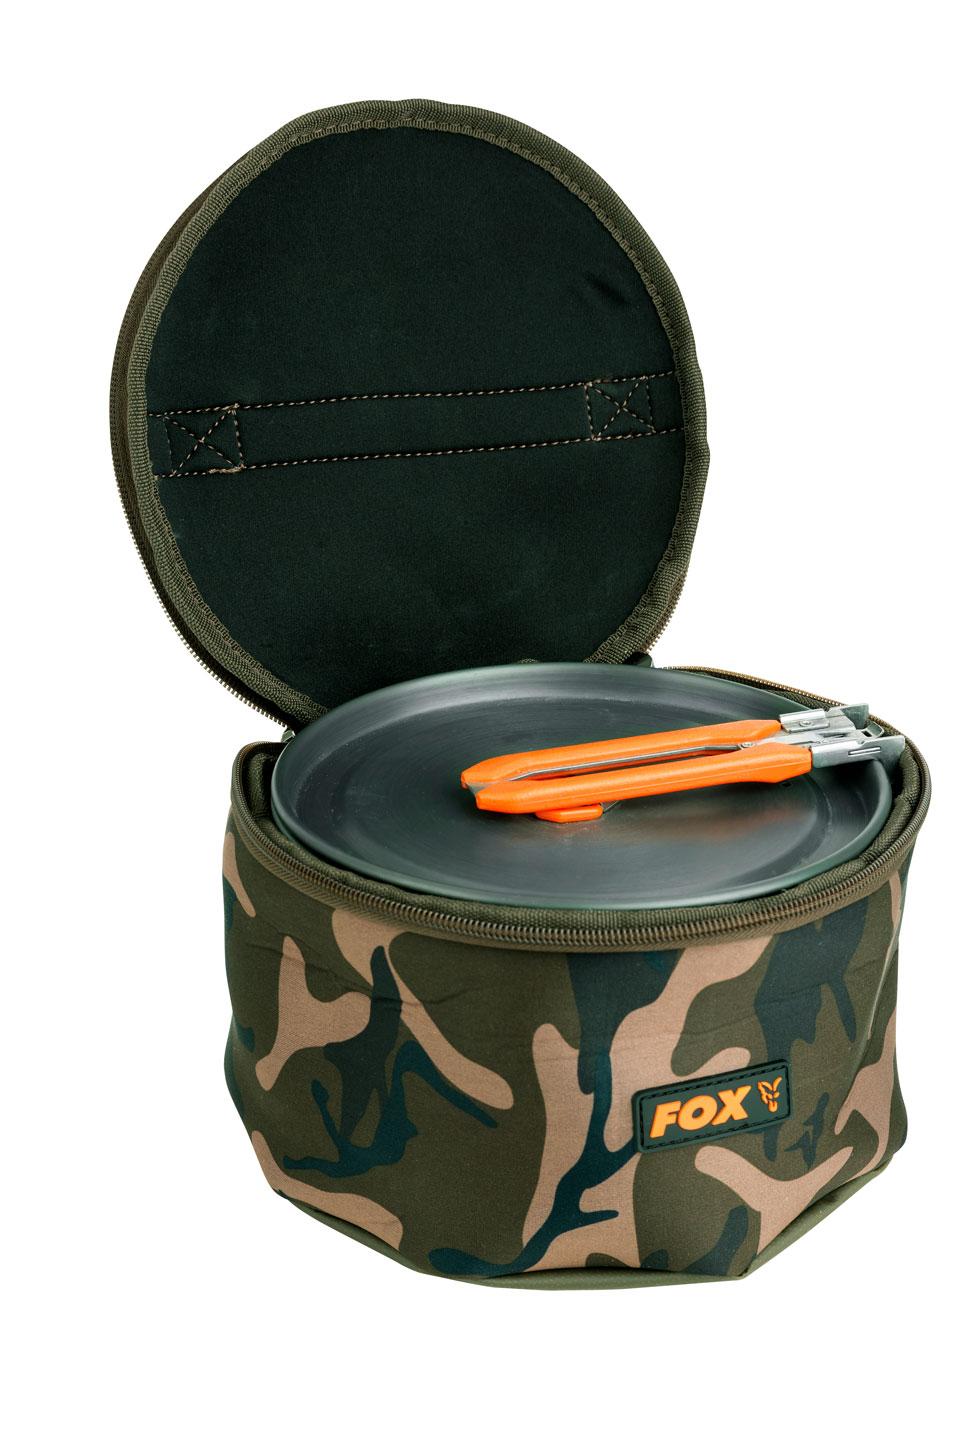 Fox Camo Cookset Bag Sac pour Fox Ustensiles de Cuisine clu392 Carp-Shop